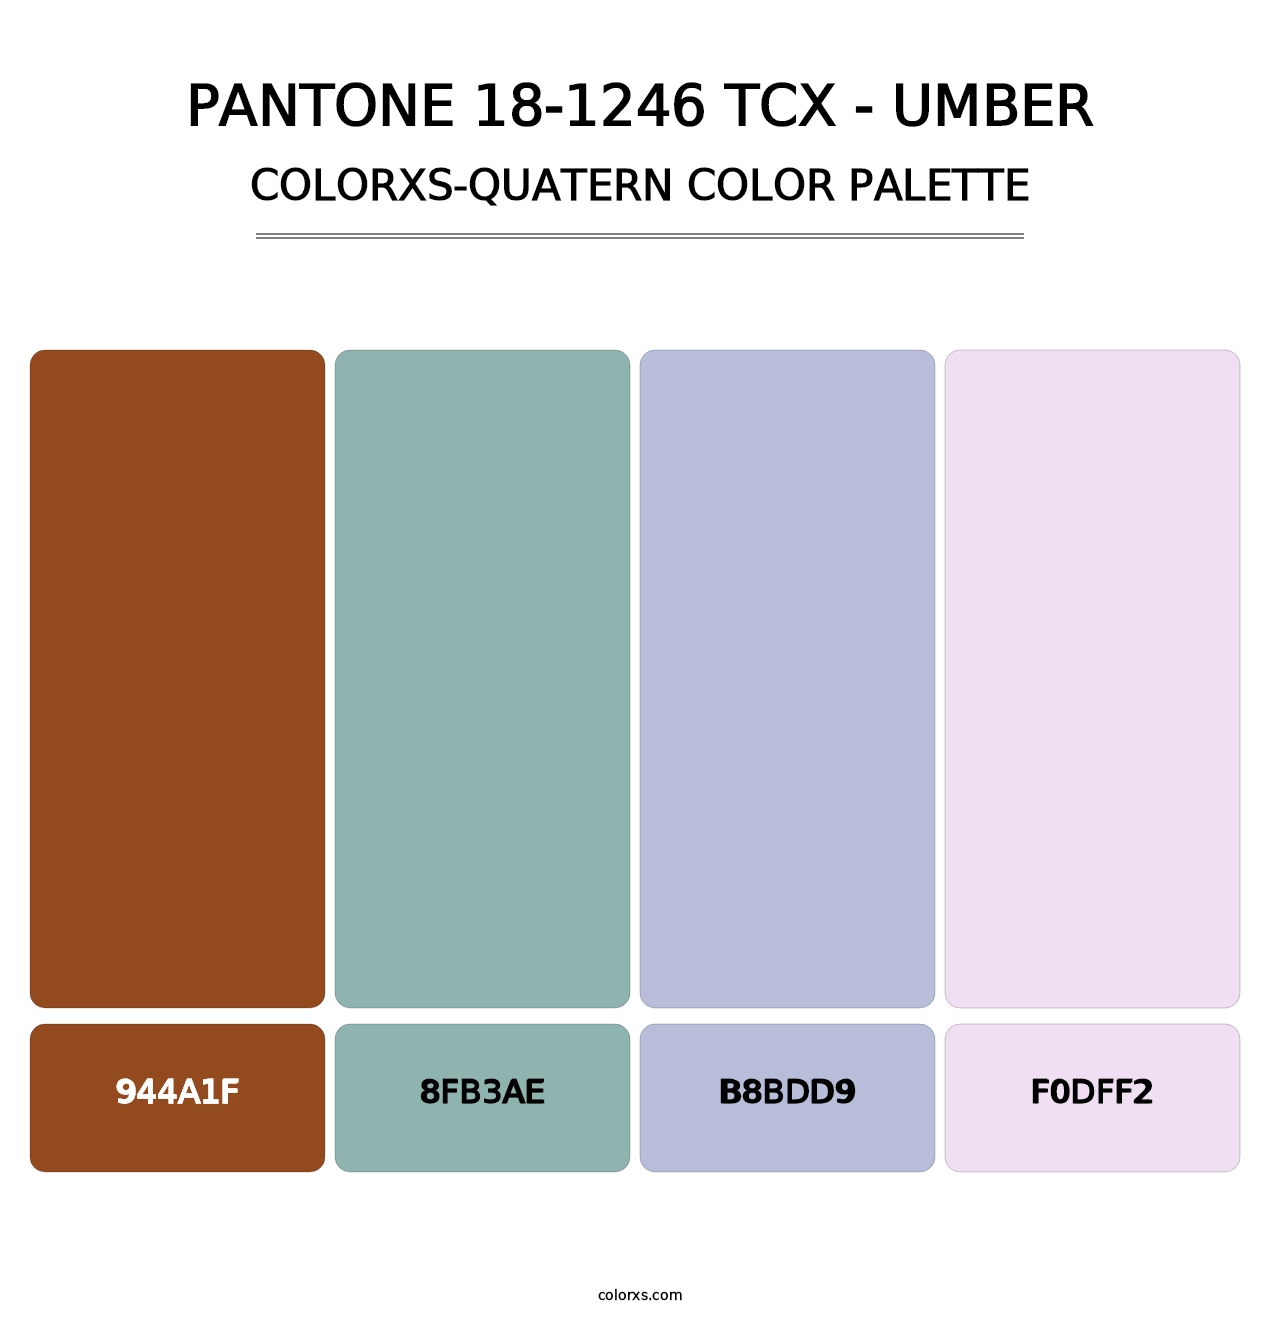 PANTONE 18-1246 TCX - Umber - Colorxs Quatern Palette